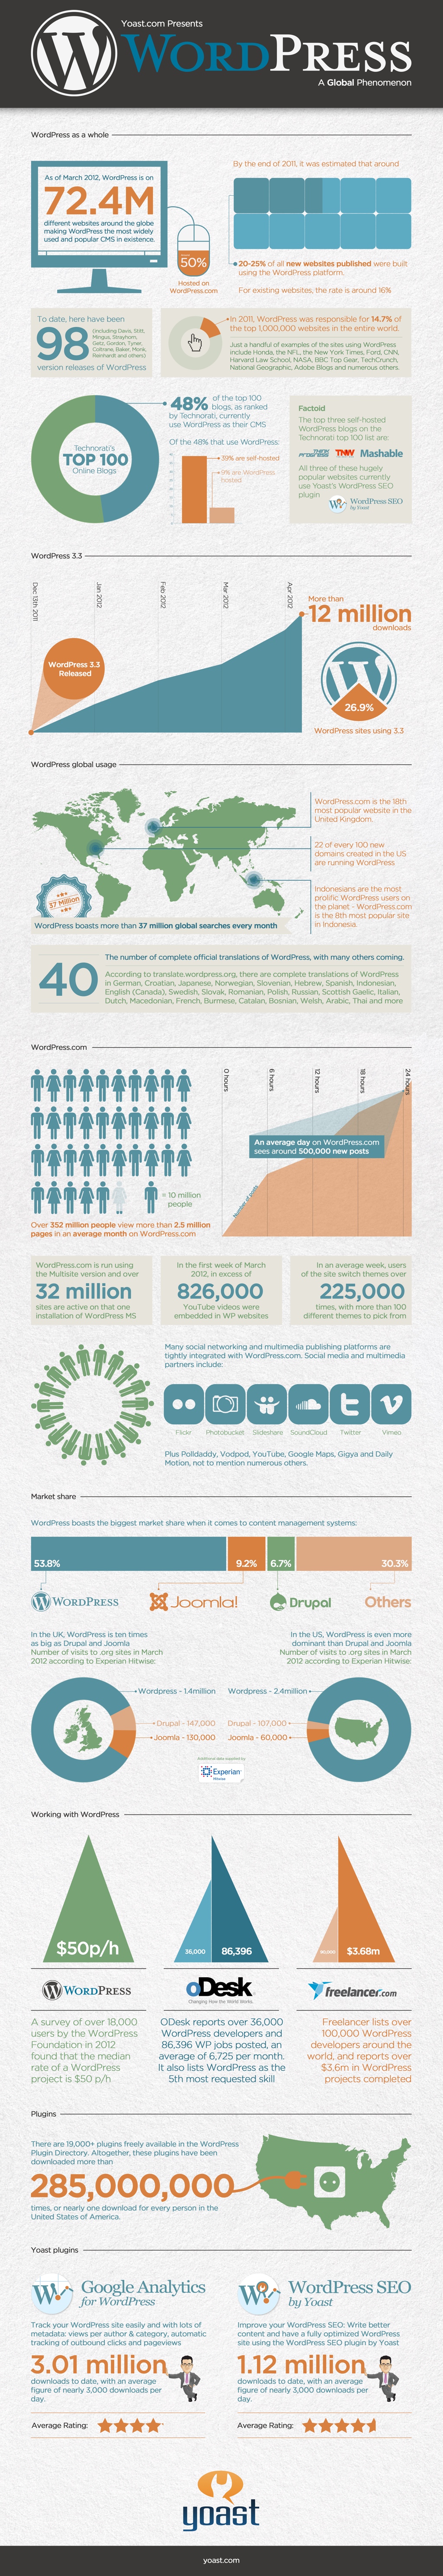 wordpress-stats-infographic-yoast-full